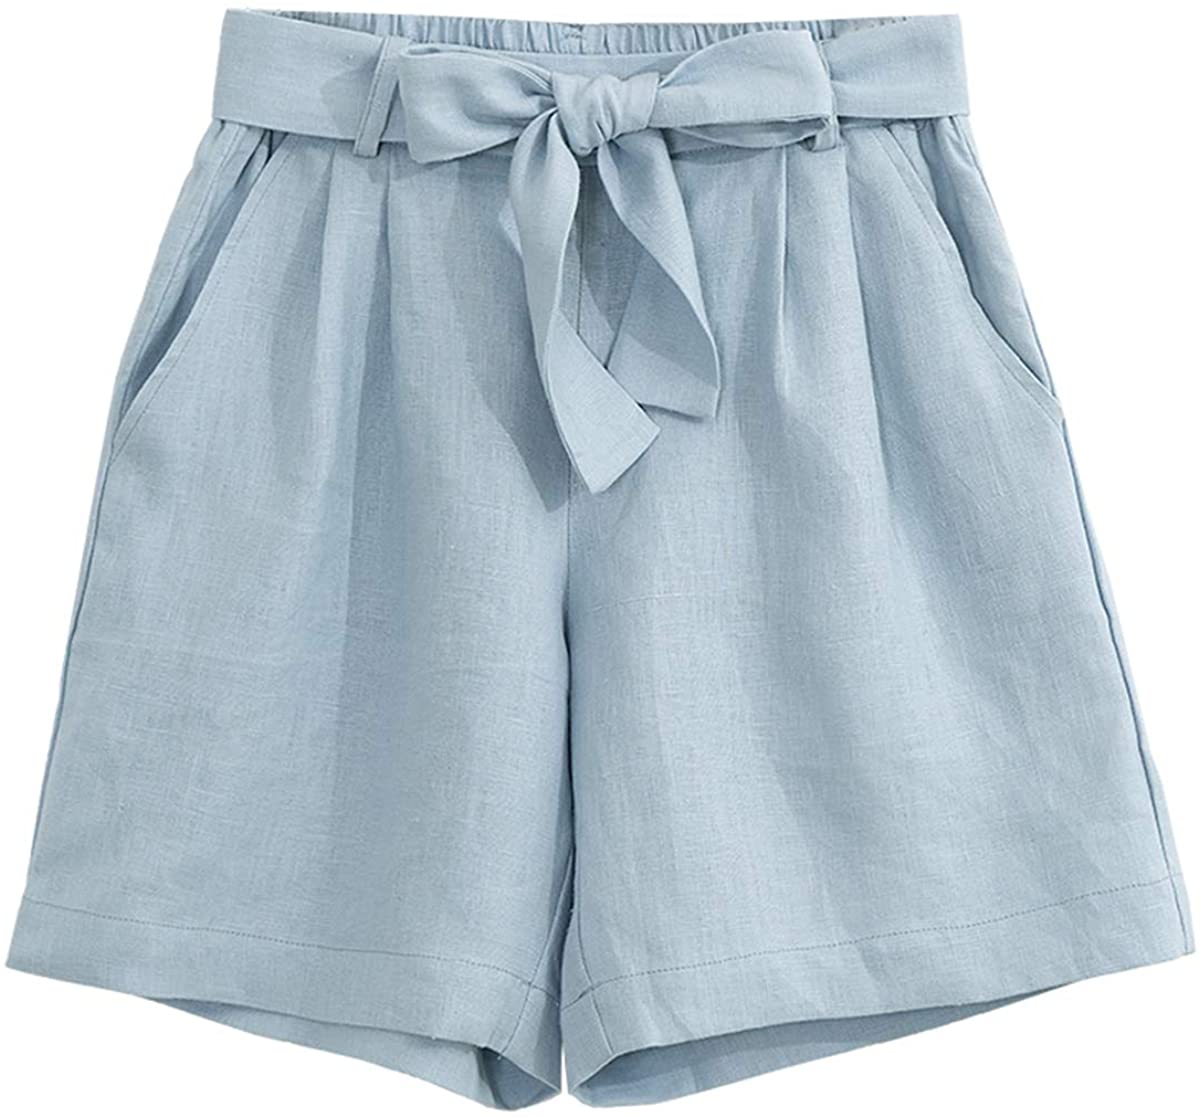 Amazhiyu Pants S / Grey Blue Linen Self-Tie Bermuda Short